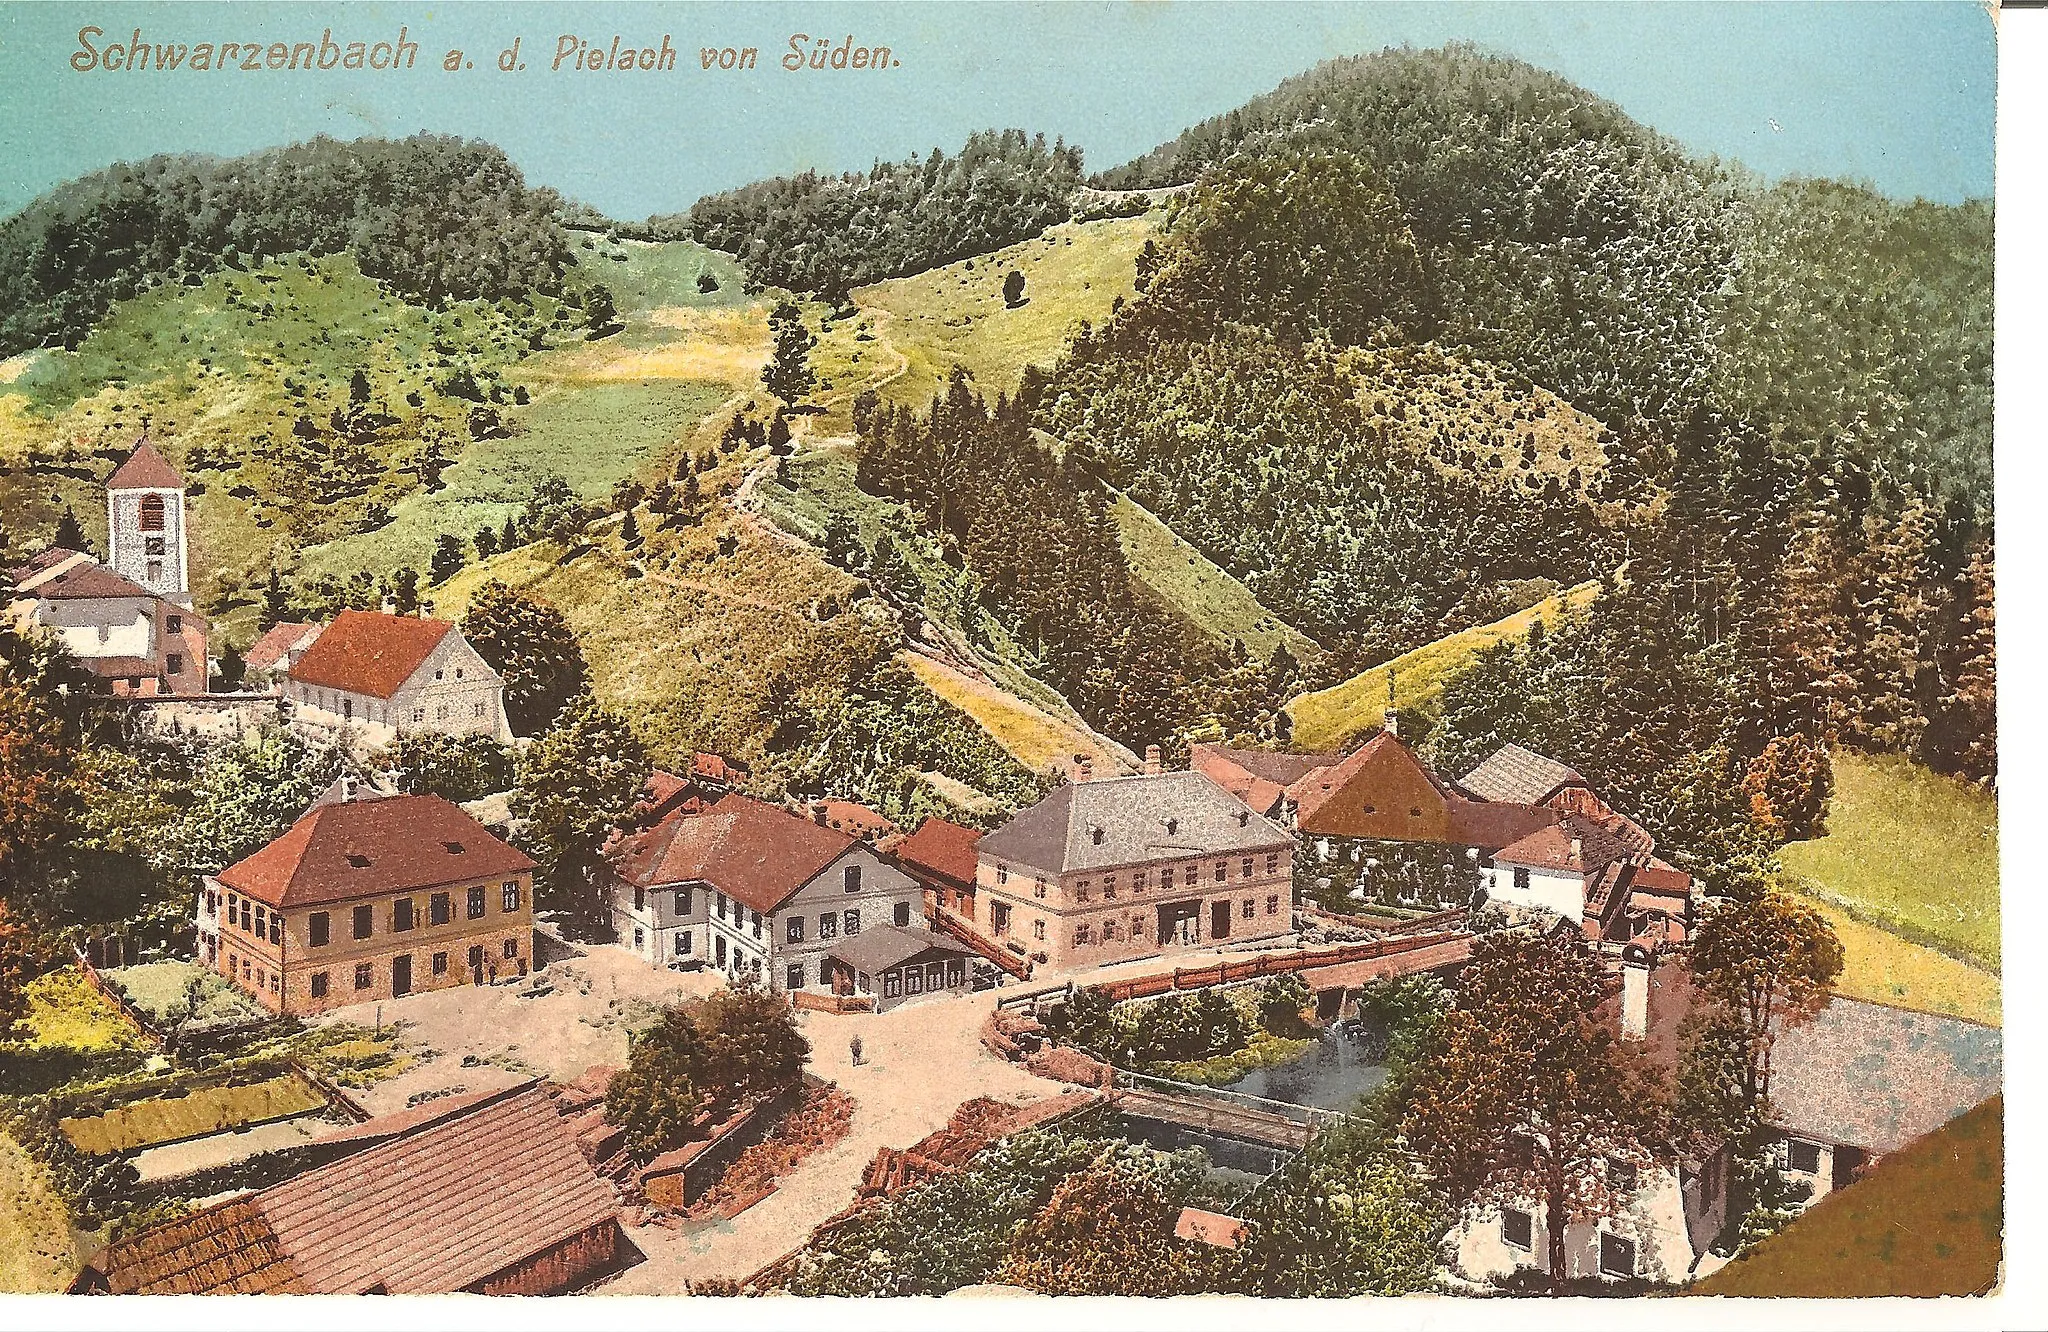 Photo showing: 1912 Schwarzenbach an der Pielach